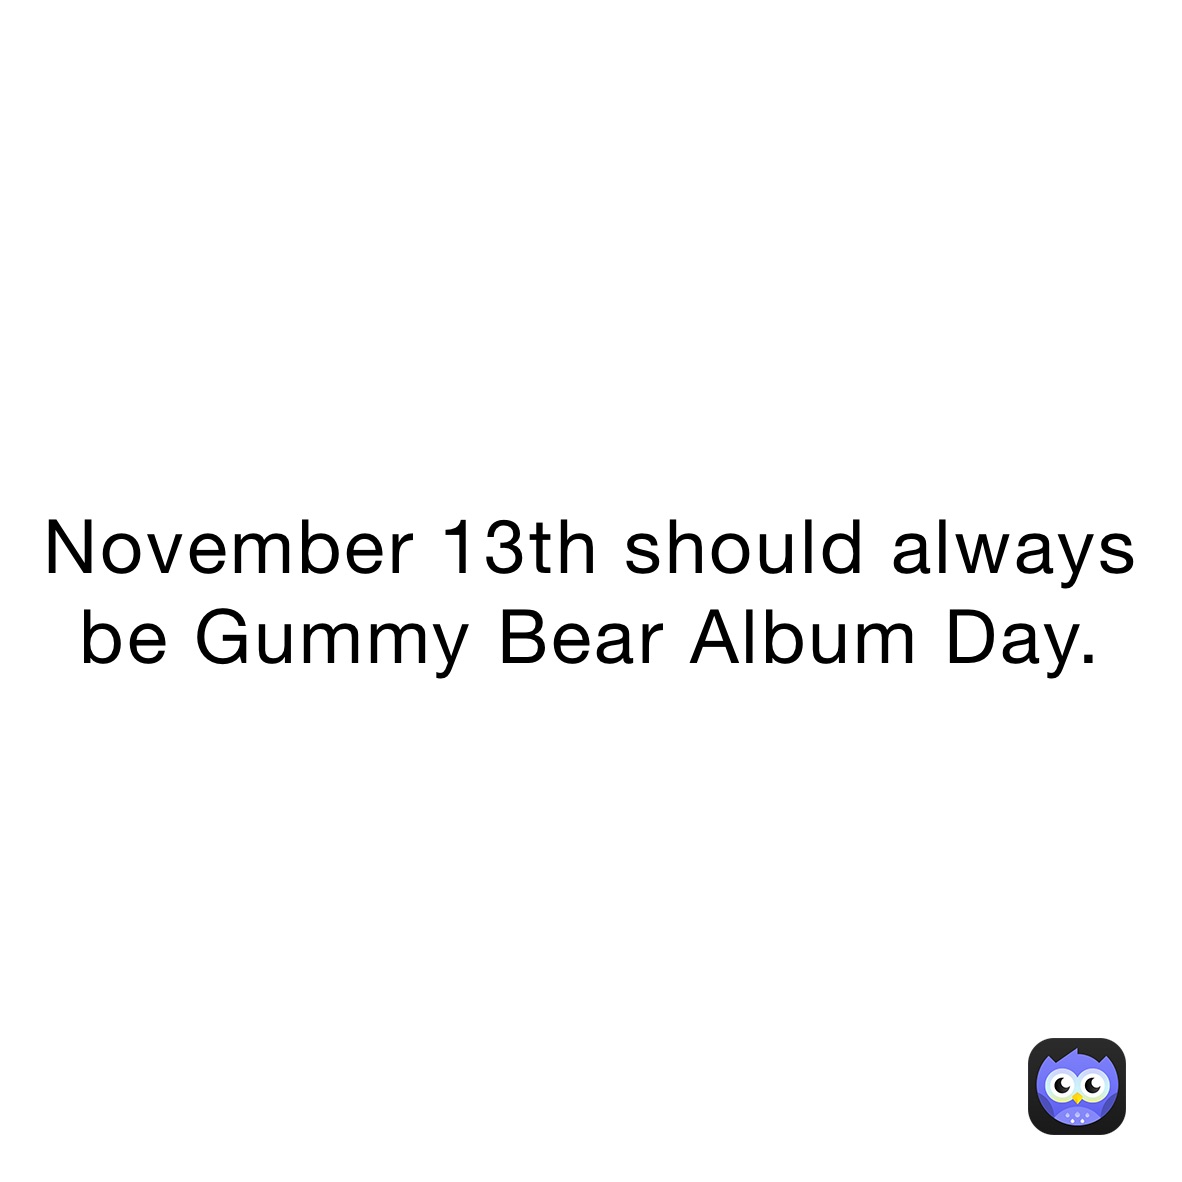 November 13th should always be Gummy Bear Album Day.